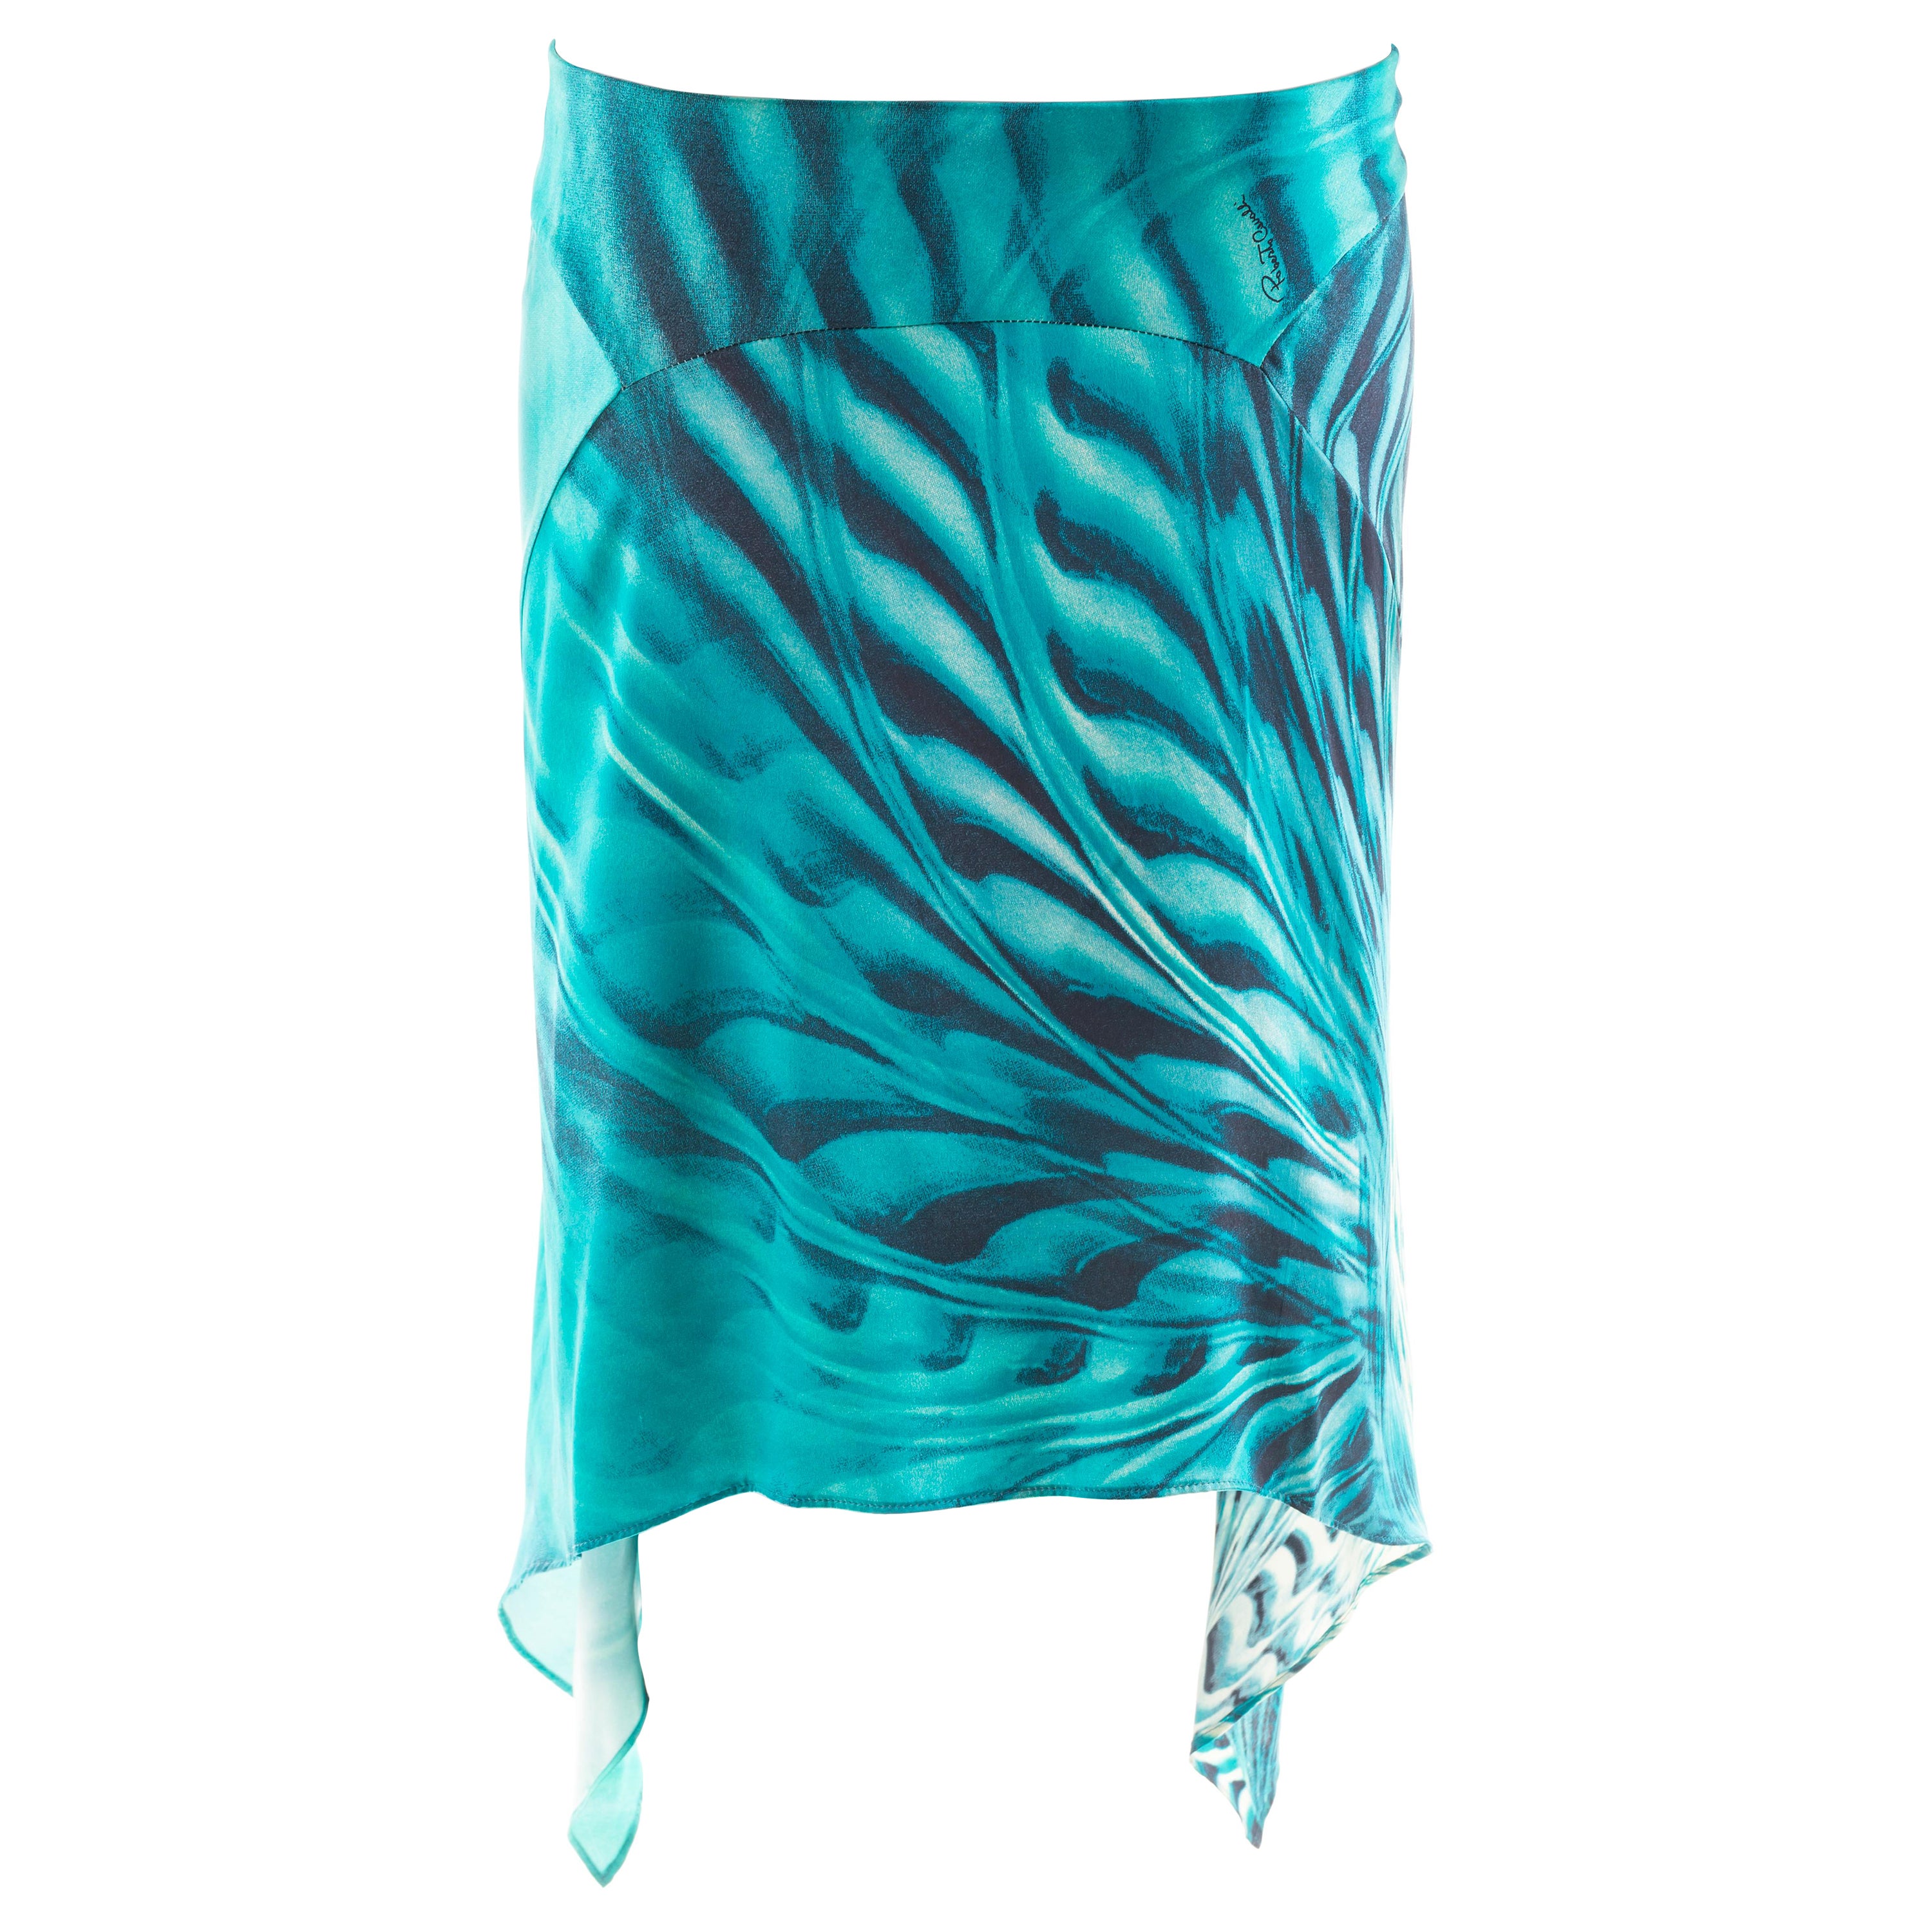 Roberto Cavalli S/S 2001 blue asymmetrical “Peacock” print skirt For Sale